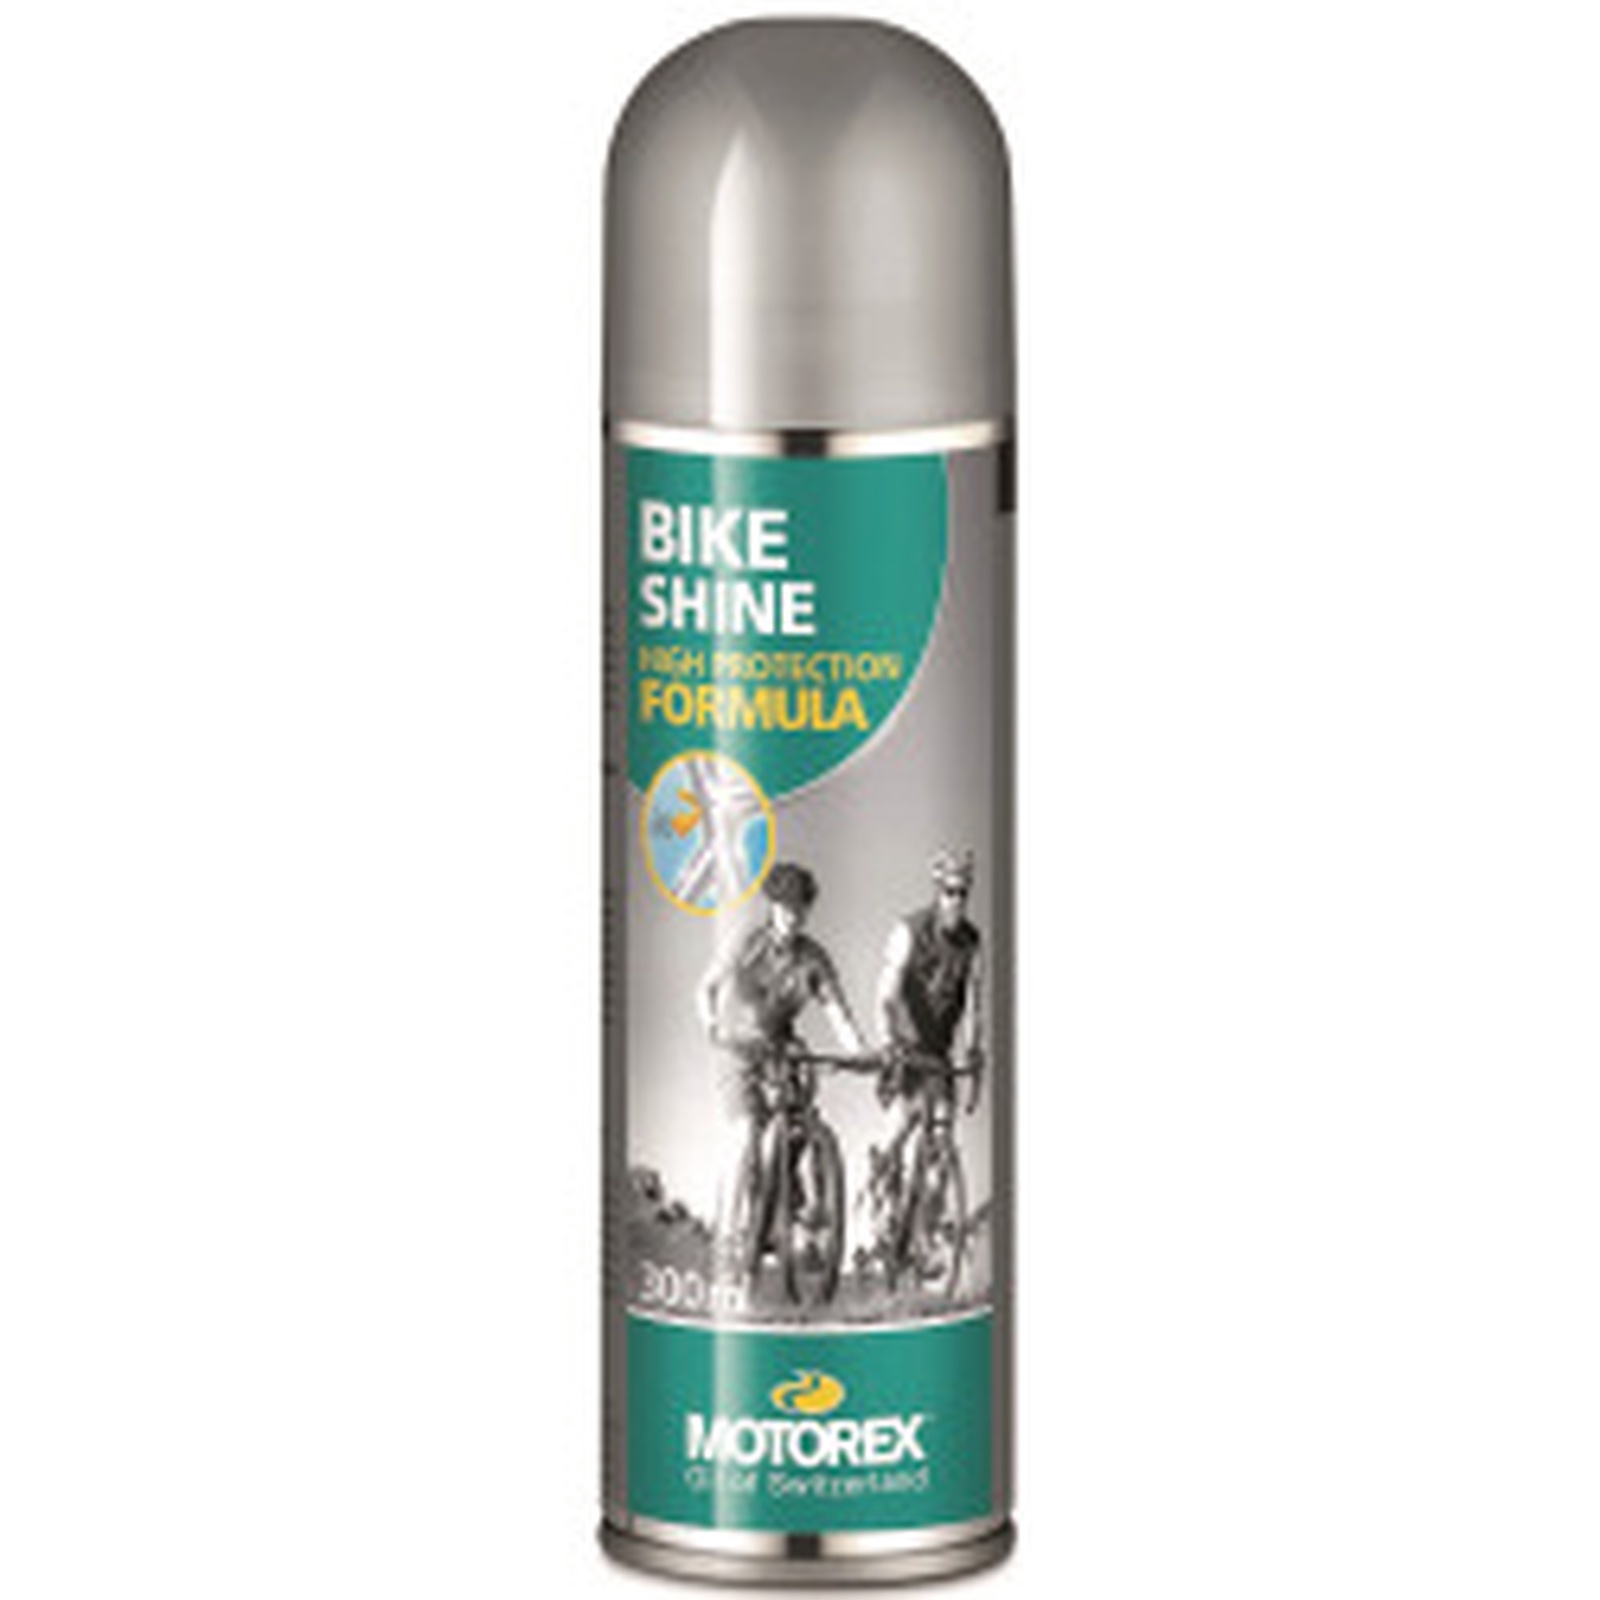 Bike Shine spray 300 ml